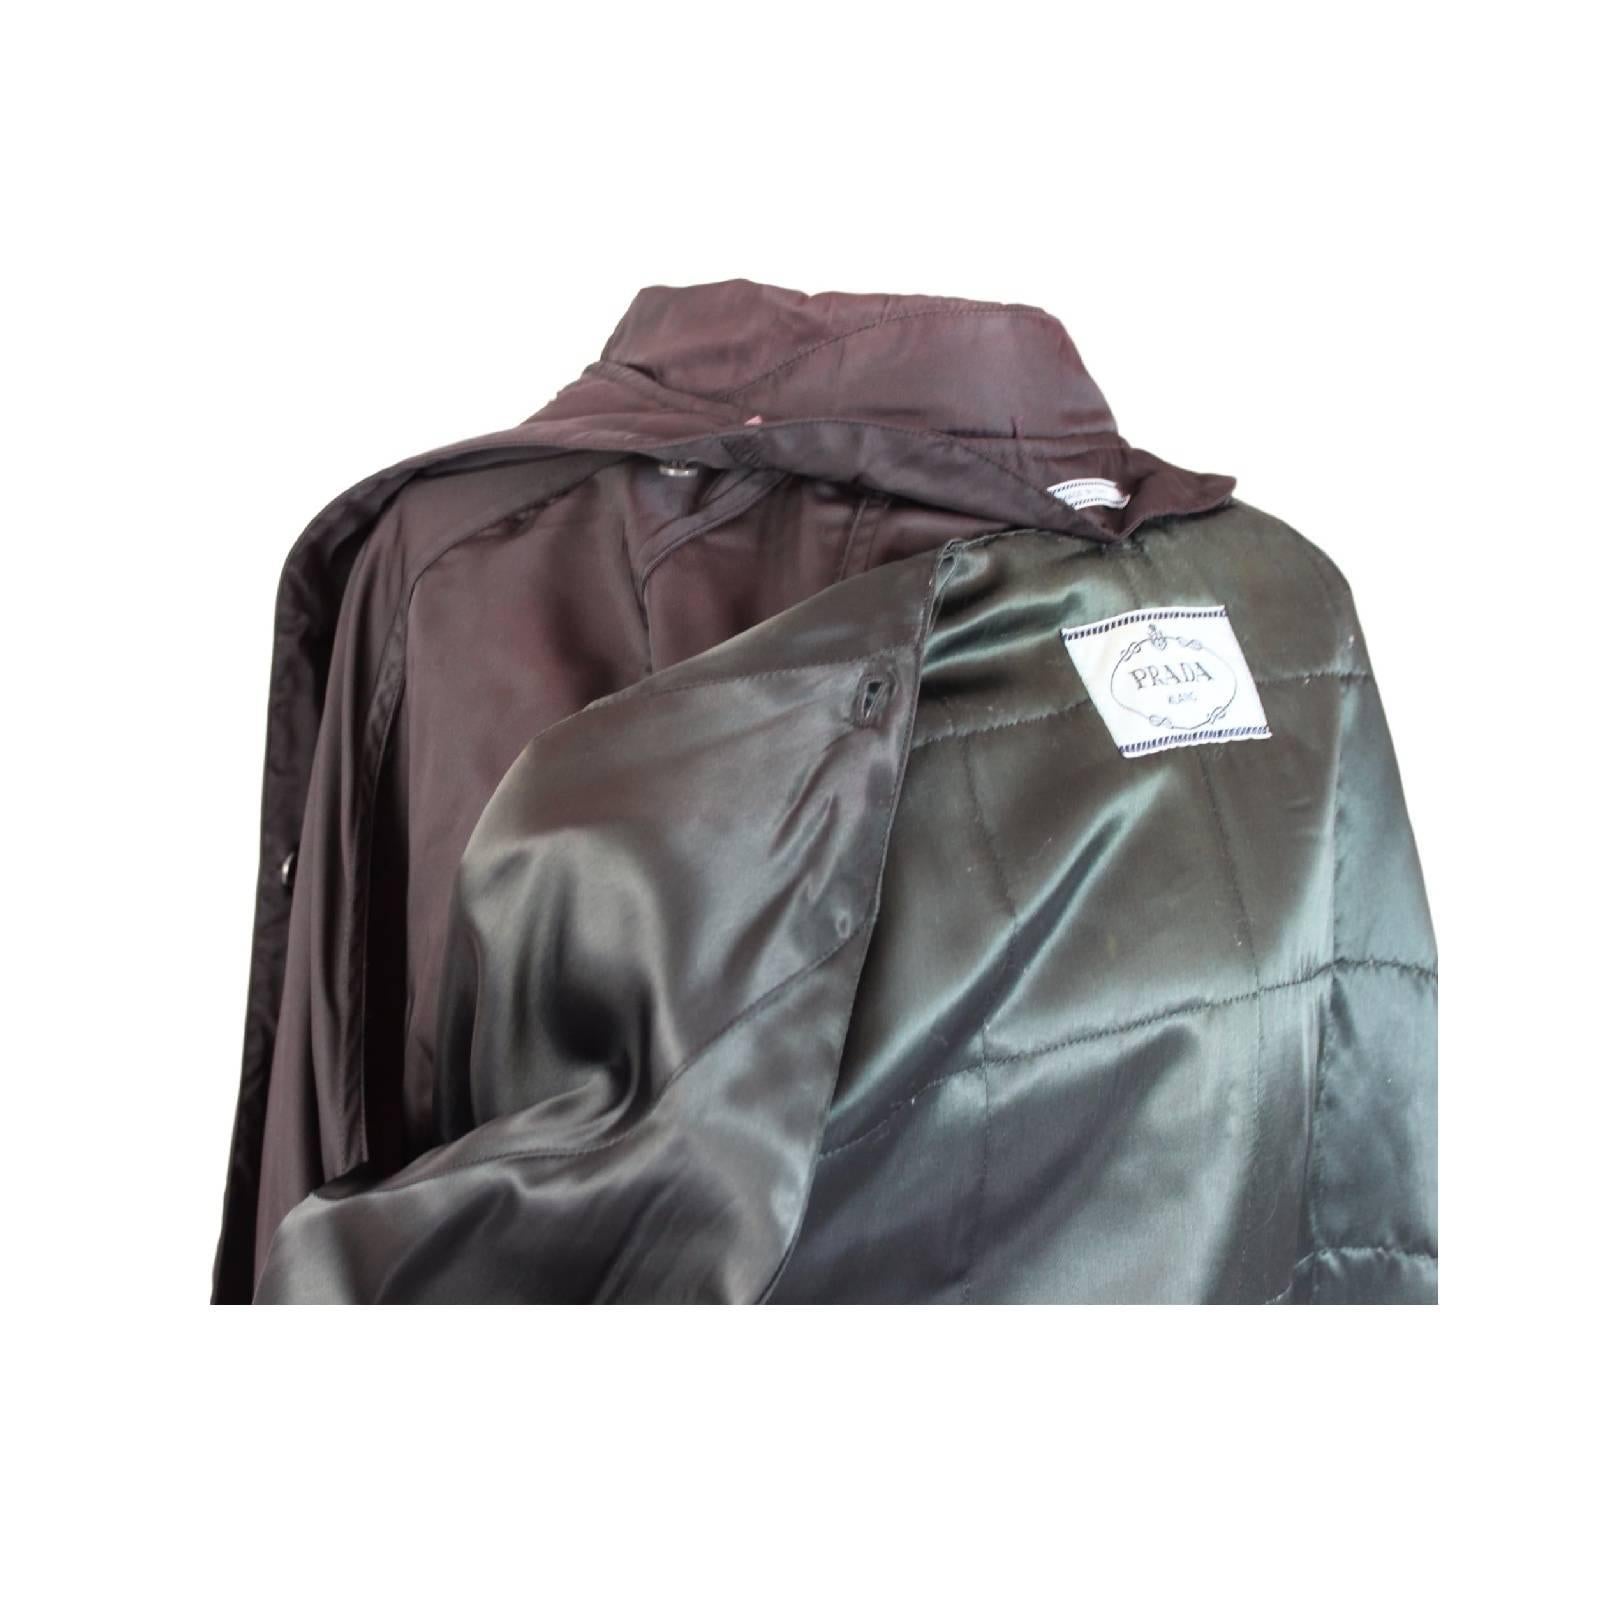 1990s Prada waterproof brown trench coat raincoat size S women’s  In Excellent Condition For Sale In Brindisi, IT